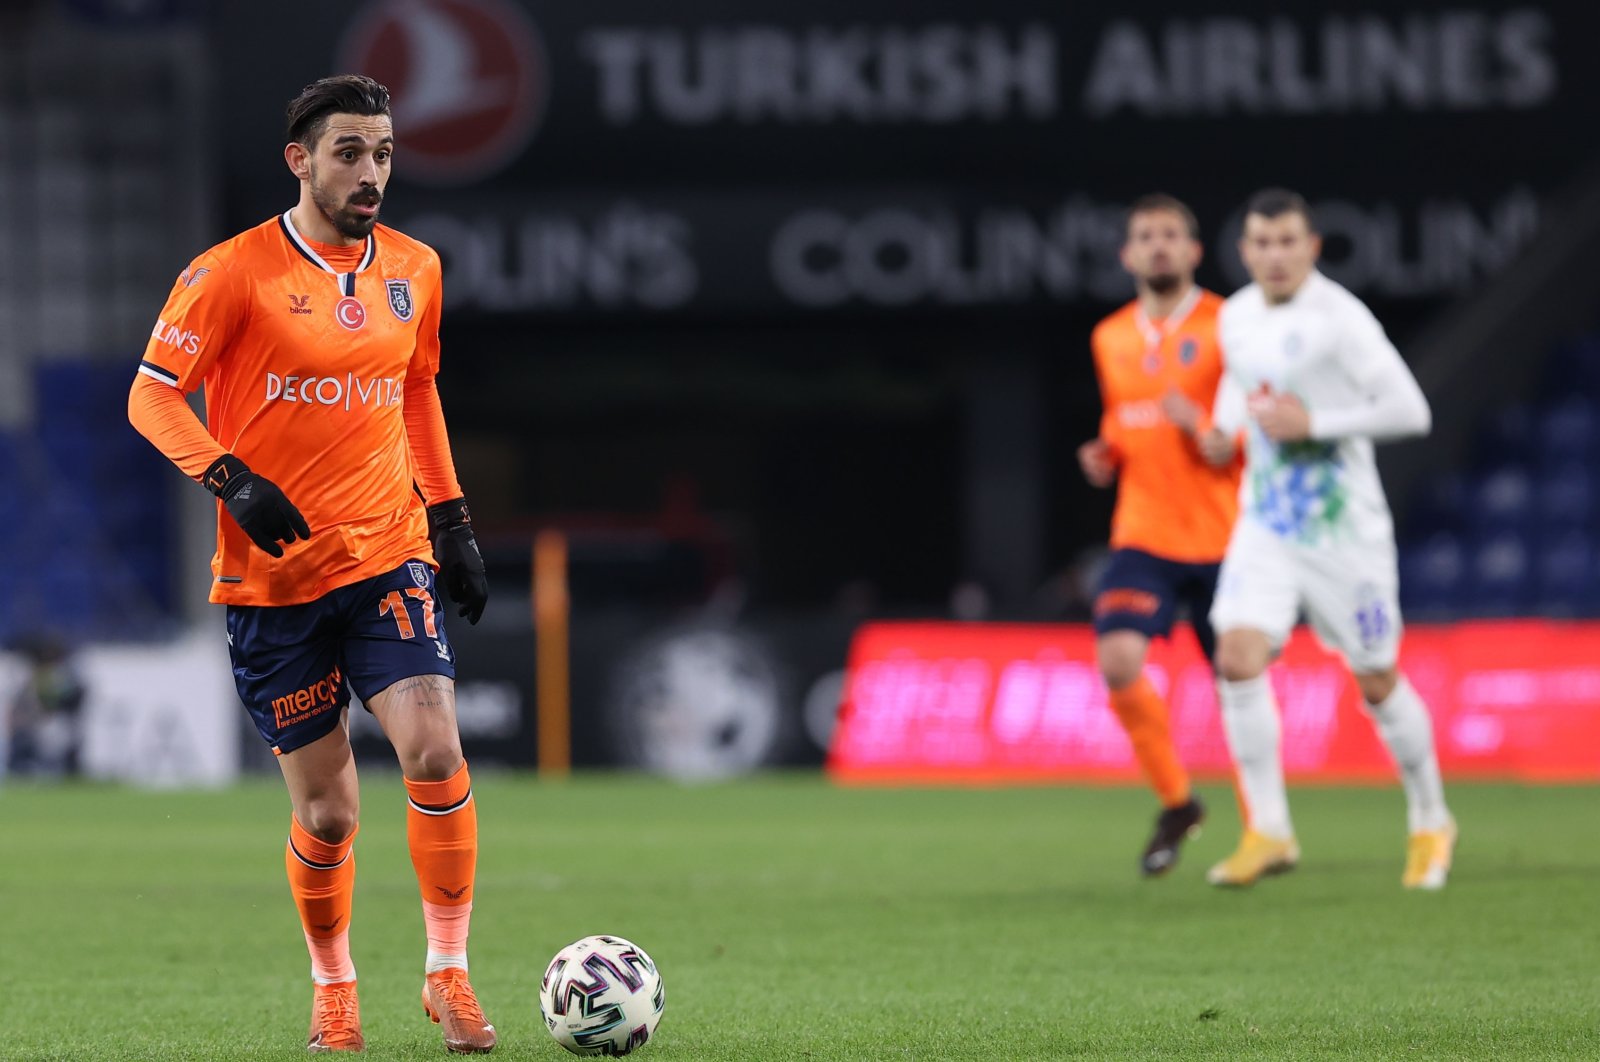 Başakşehir's Irfan Can Kahveci in action during a Süper Lig match against Rizespor at the Fatih Terim Stadium, in Istanbul, Turkey, Jan. 23, 2021. (AA Photo)